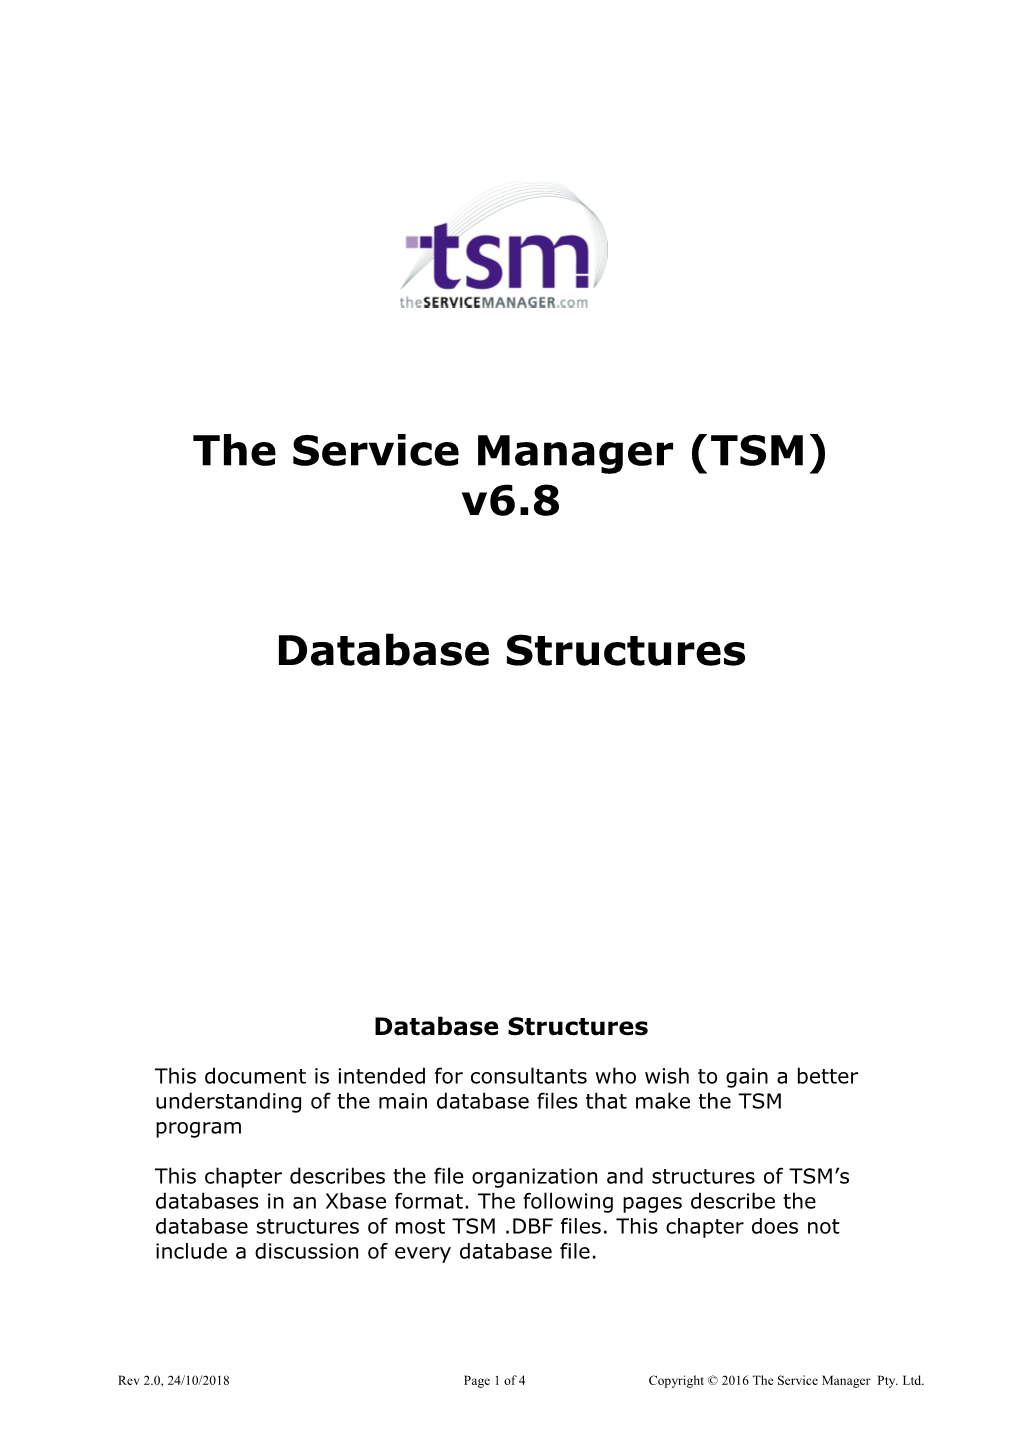 The Service Manager (TSM) V6